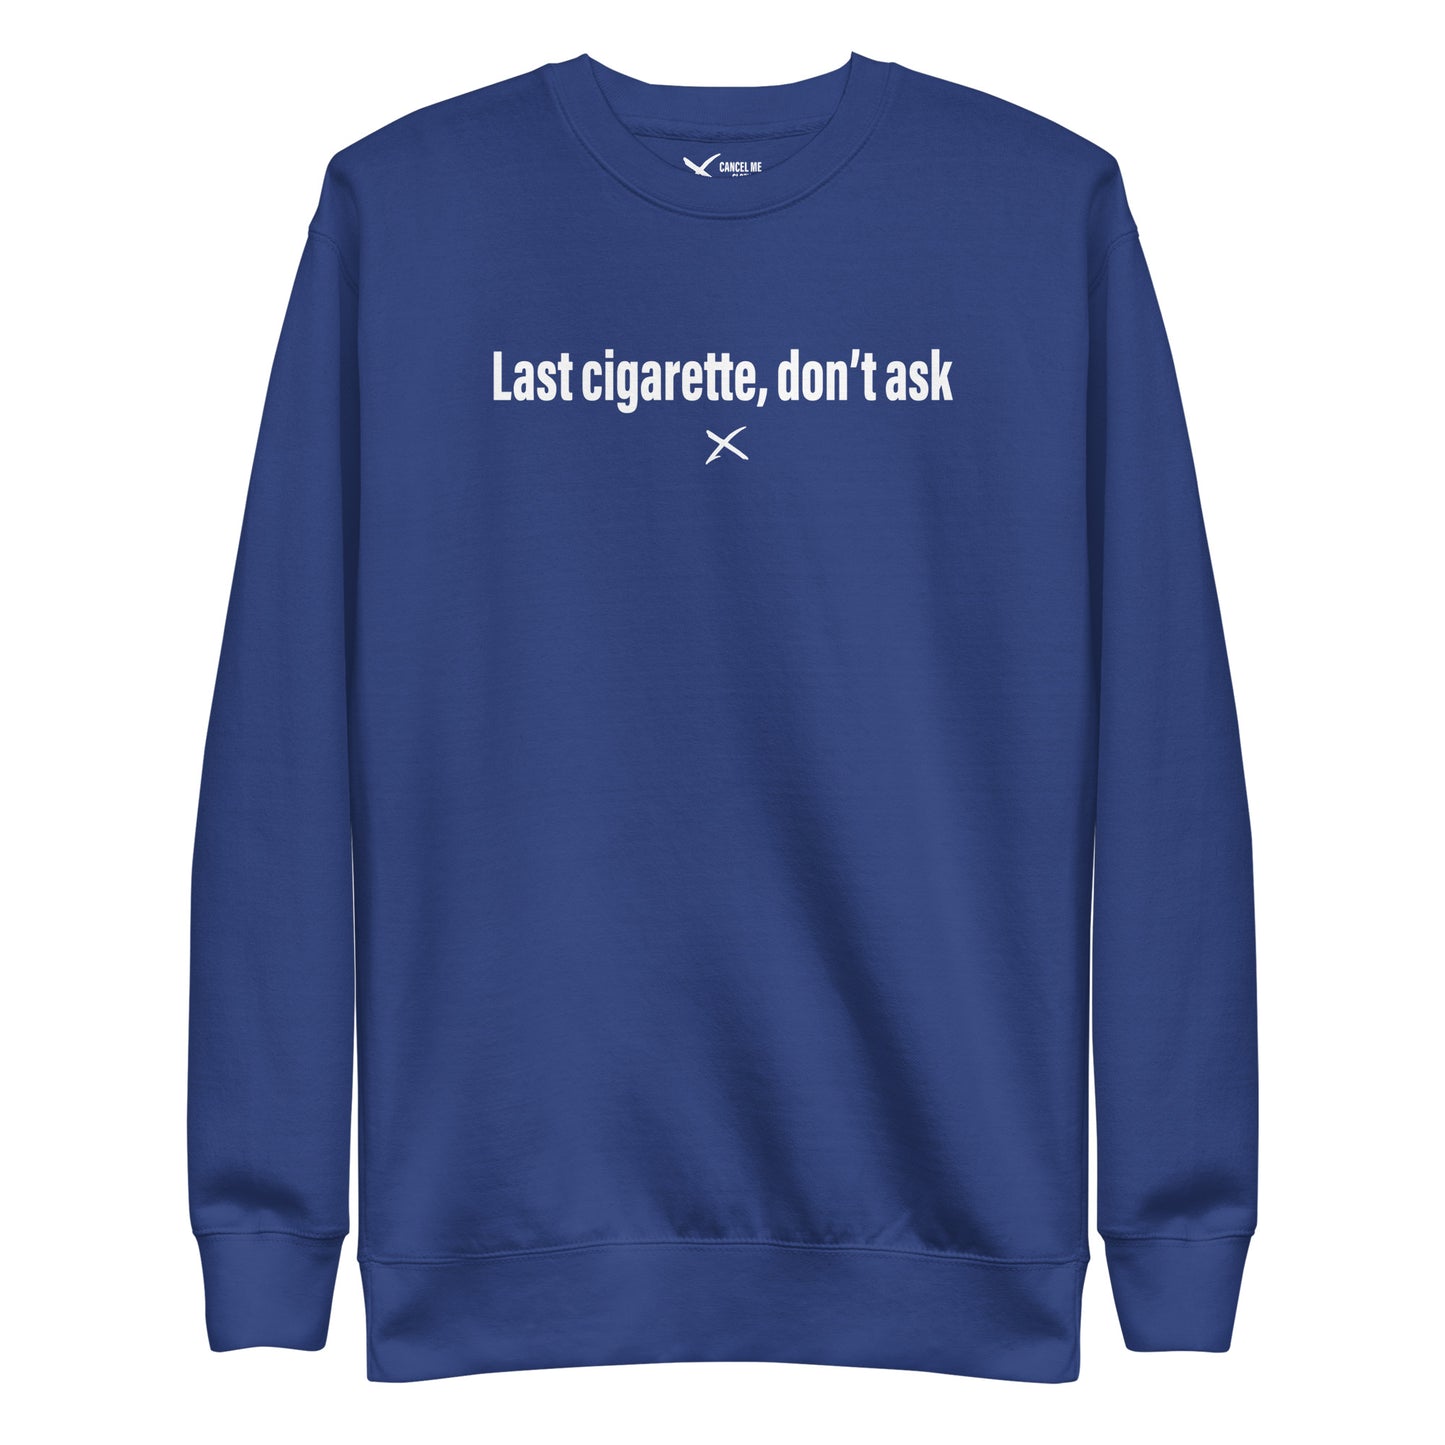 Last cigarette, don't ask - Sweatshirt